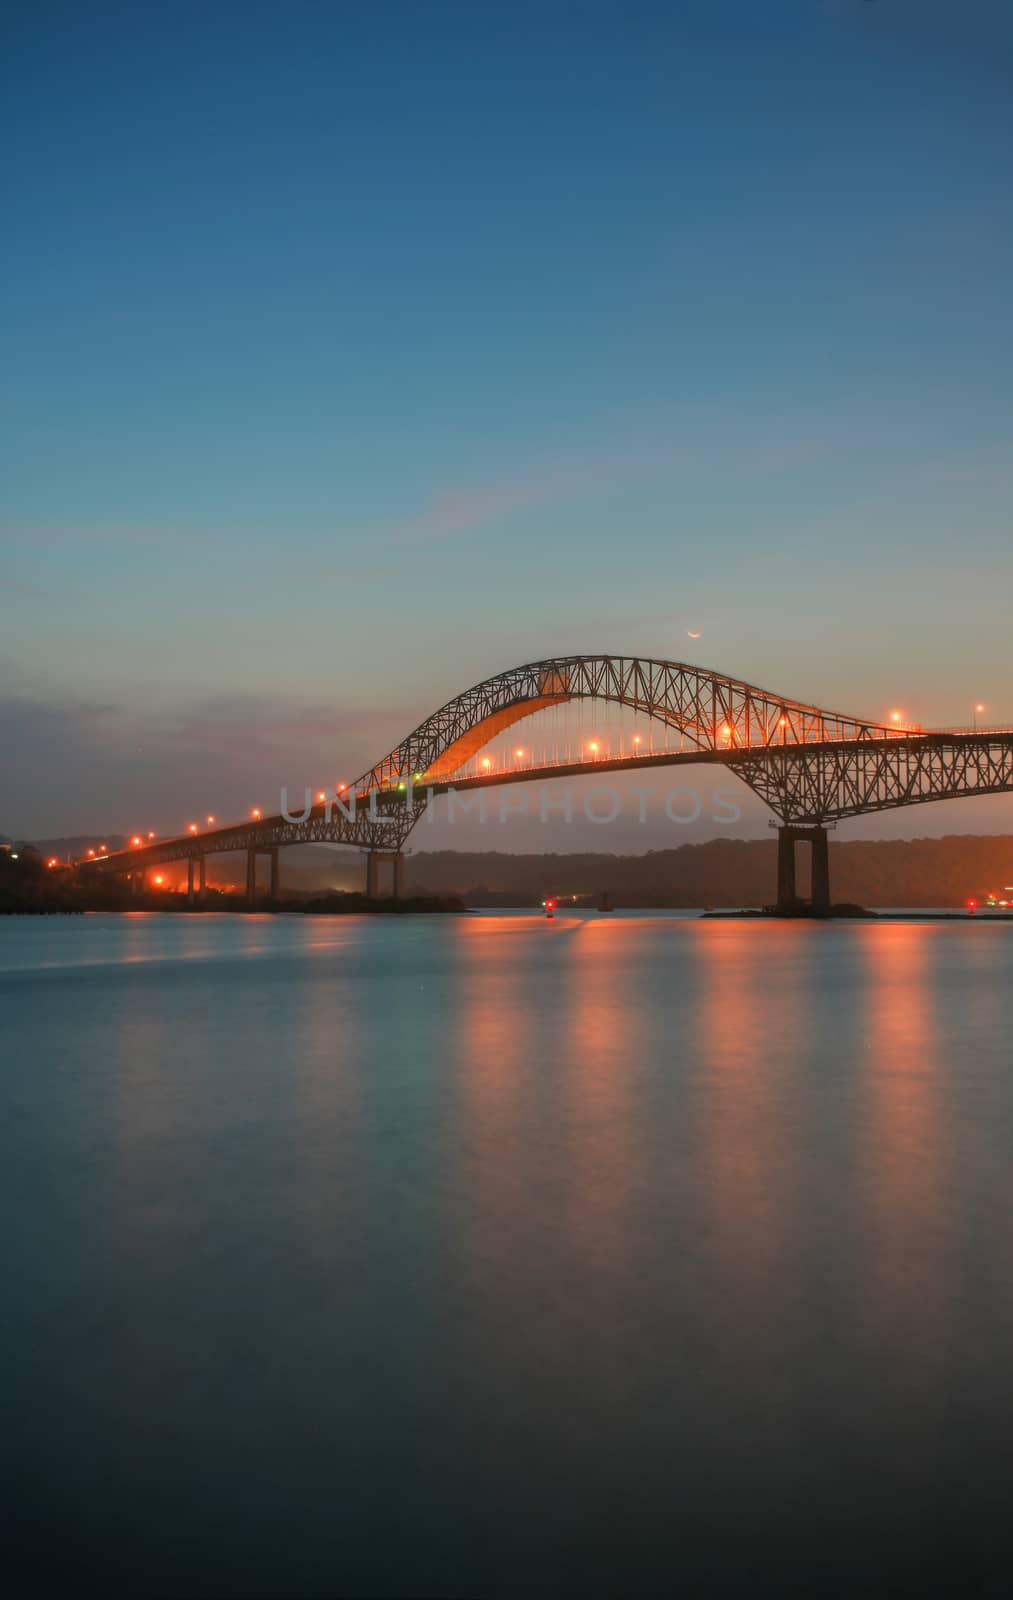 The TransAmerica Bridge in Panama City at sunset